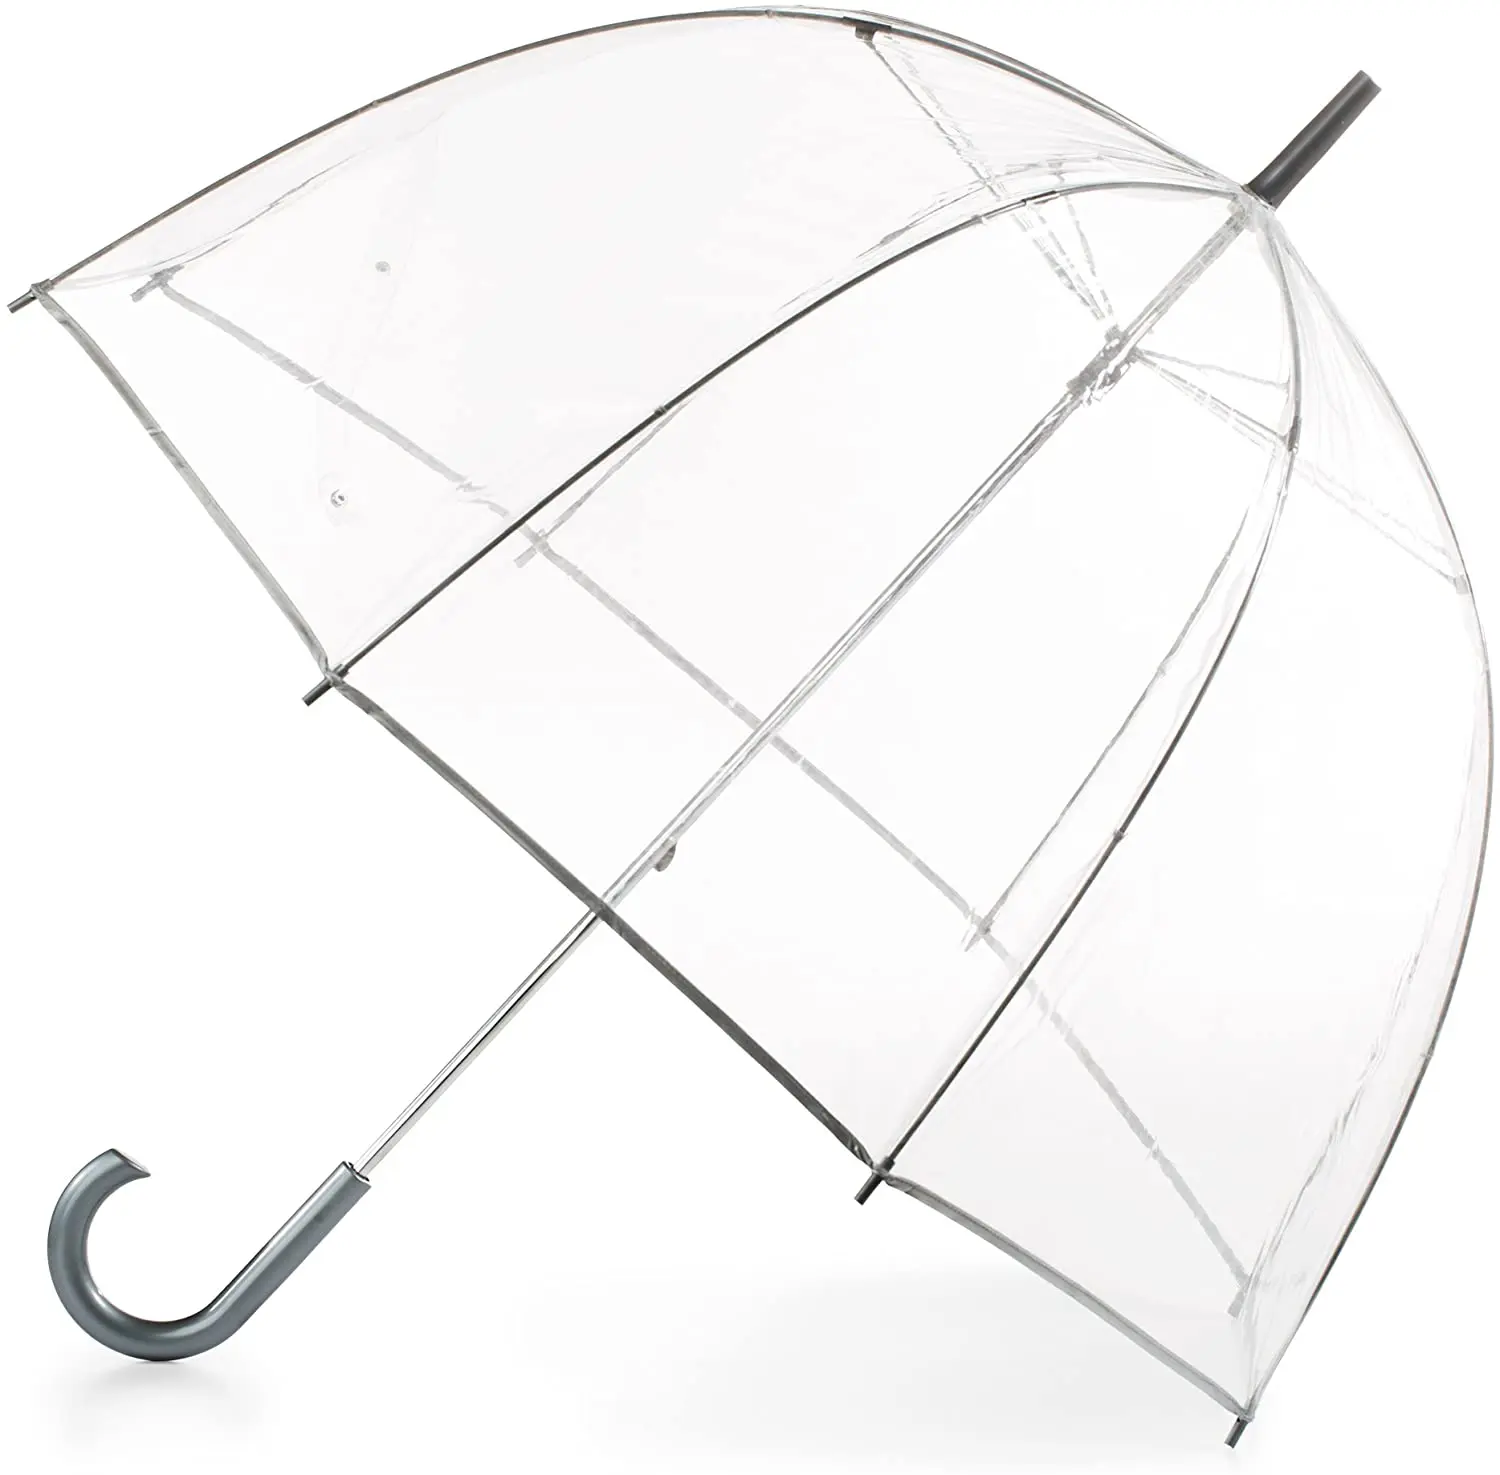 

Wholesale custom LOGO clear umbrella transparent 3 folding umbrella led clear dome parasol for women bubble sombrilla, Customized